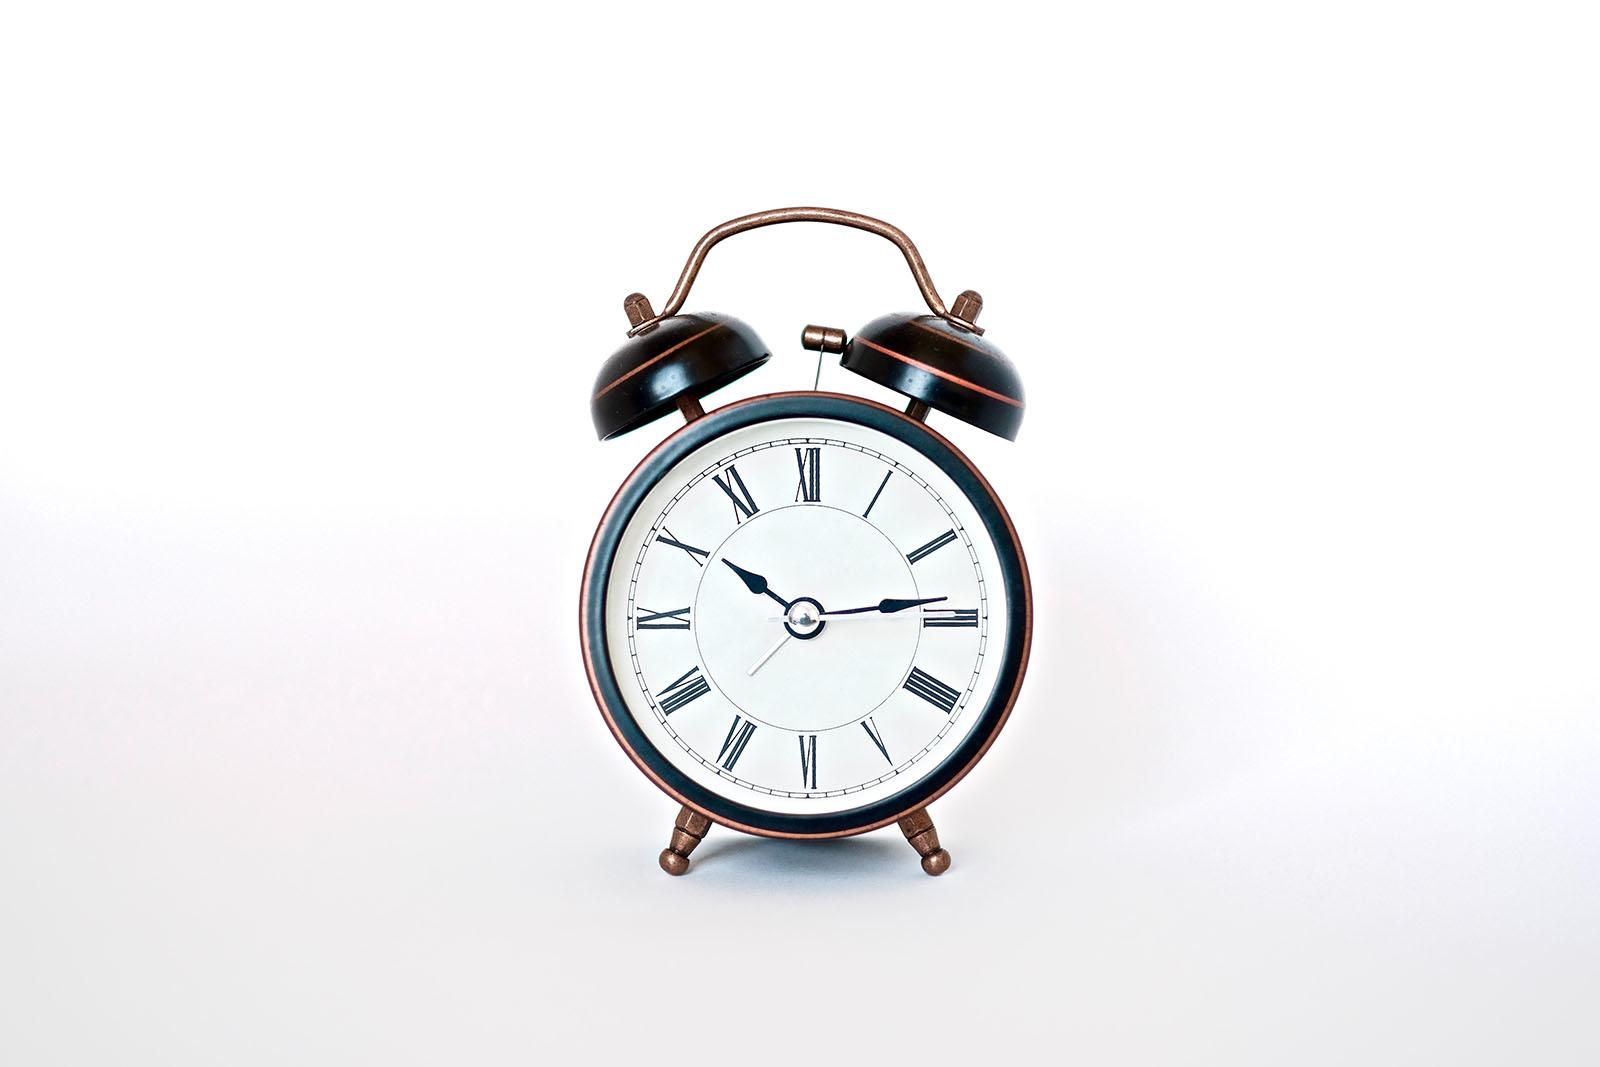 Alarm clock - Image: https://unsplash.com/@insungyoon